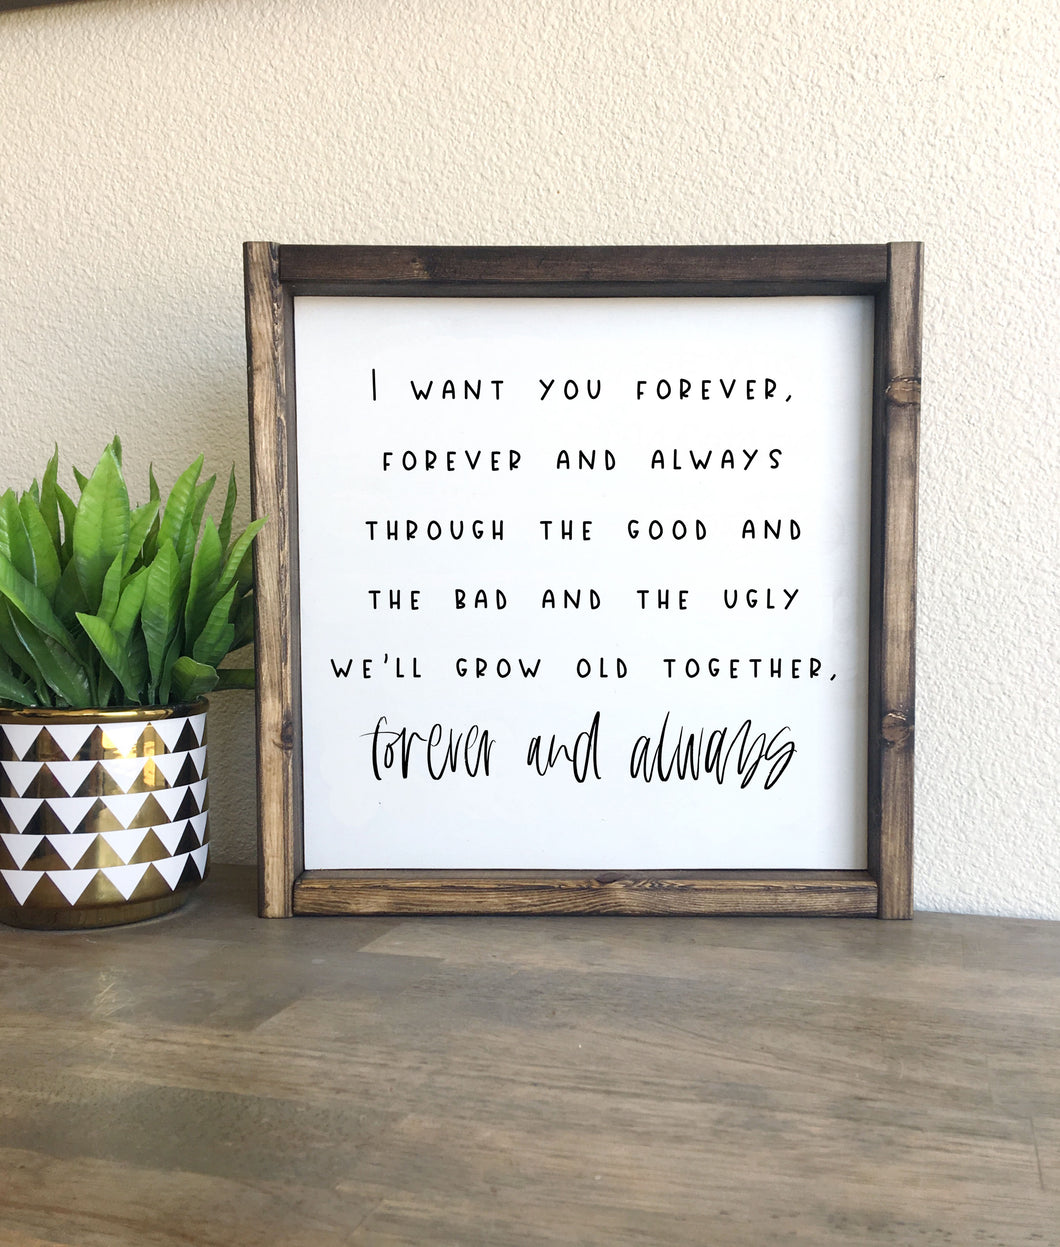 Forever and always | Framed wood sign